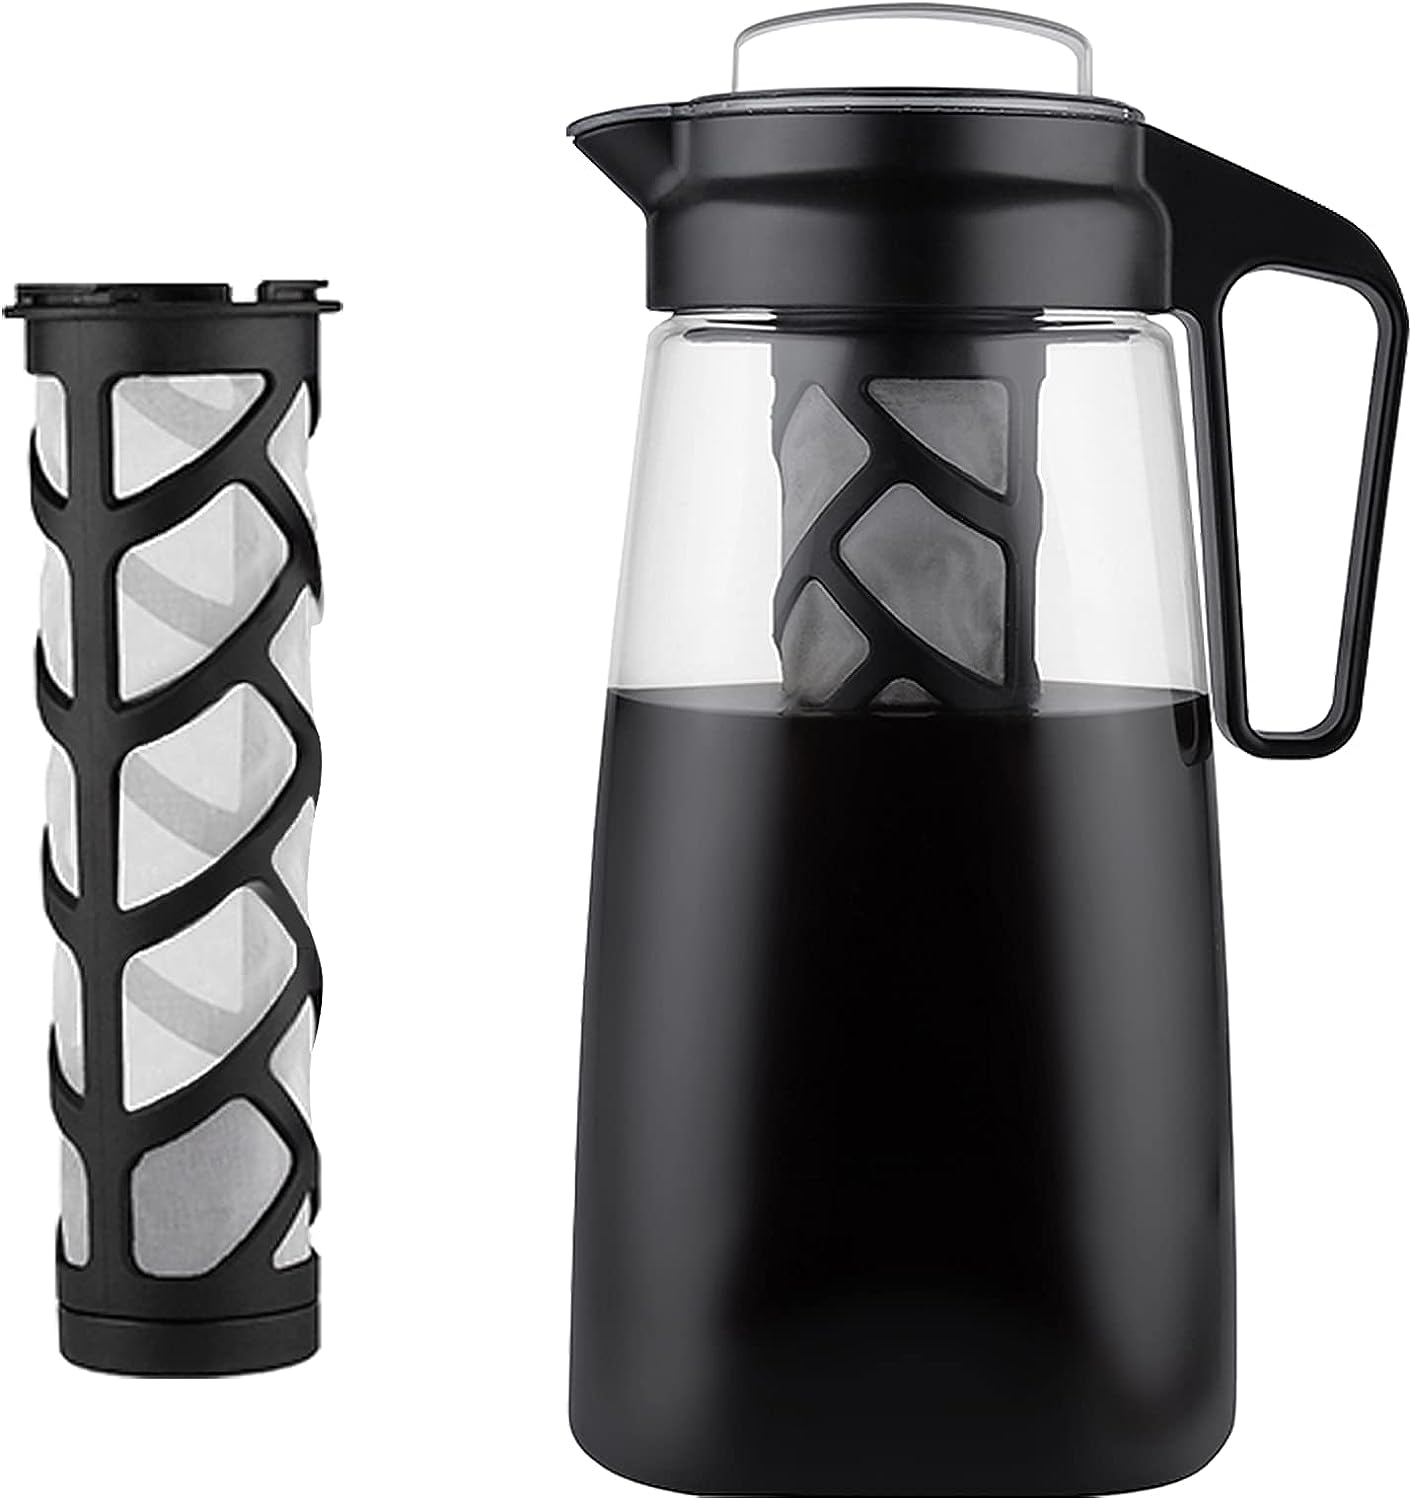 Nebulosa Cold Brew Coffee Maker Review